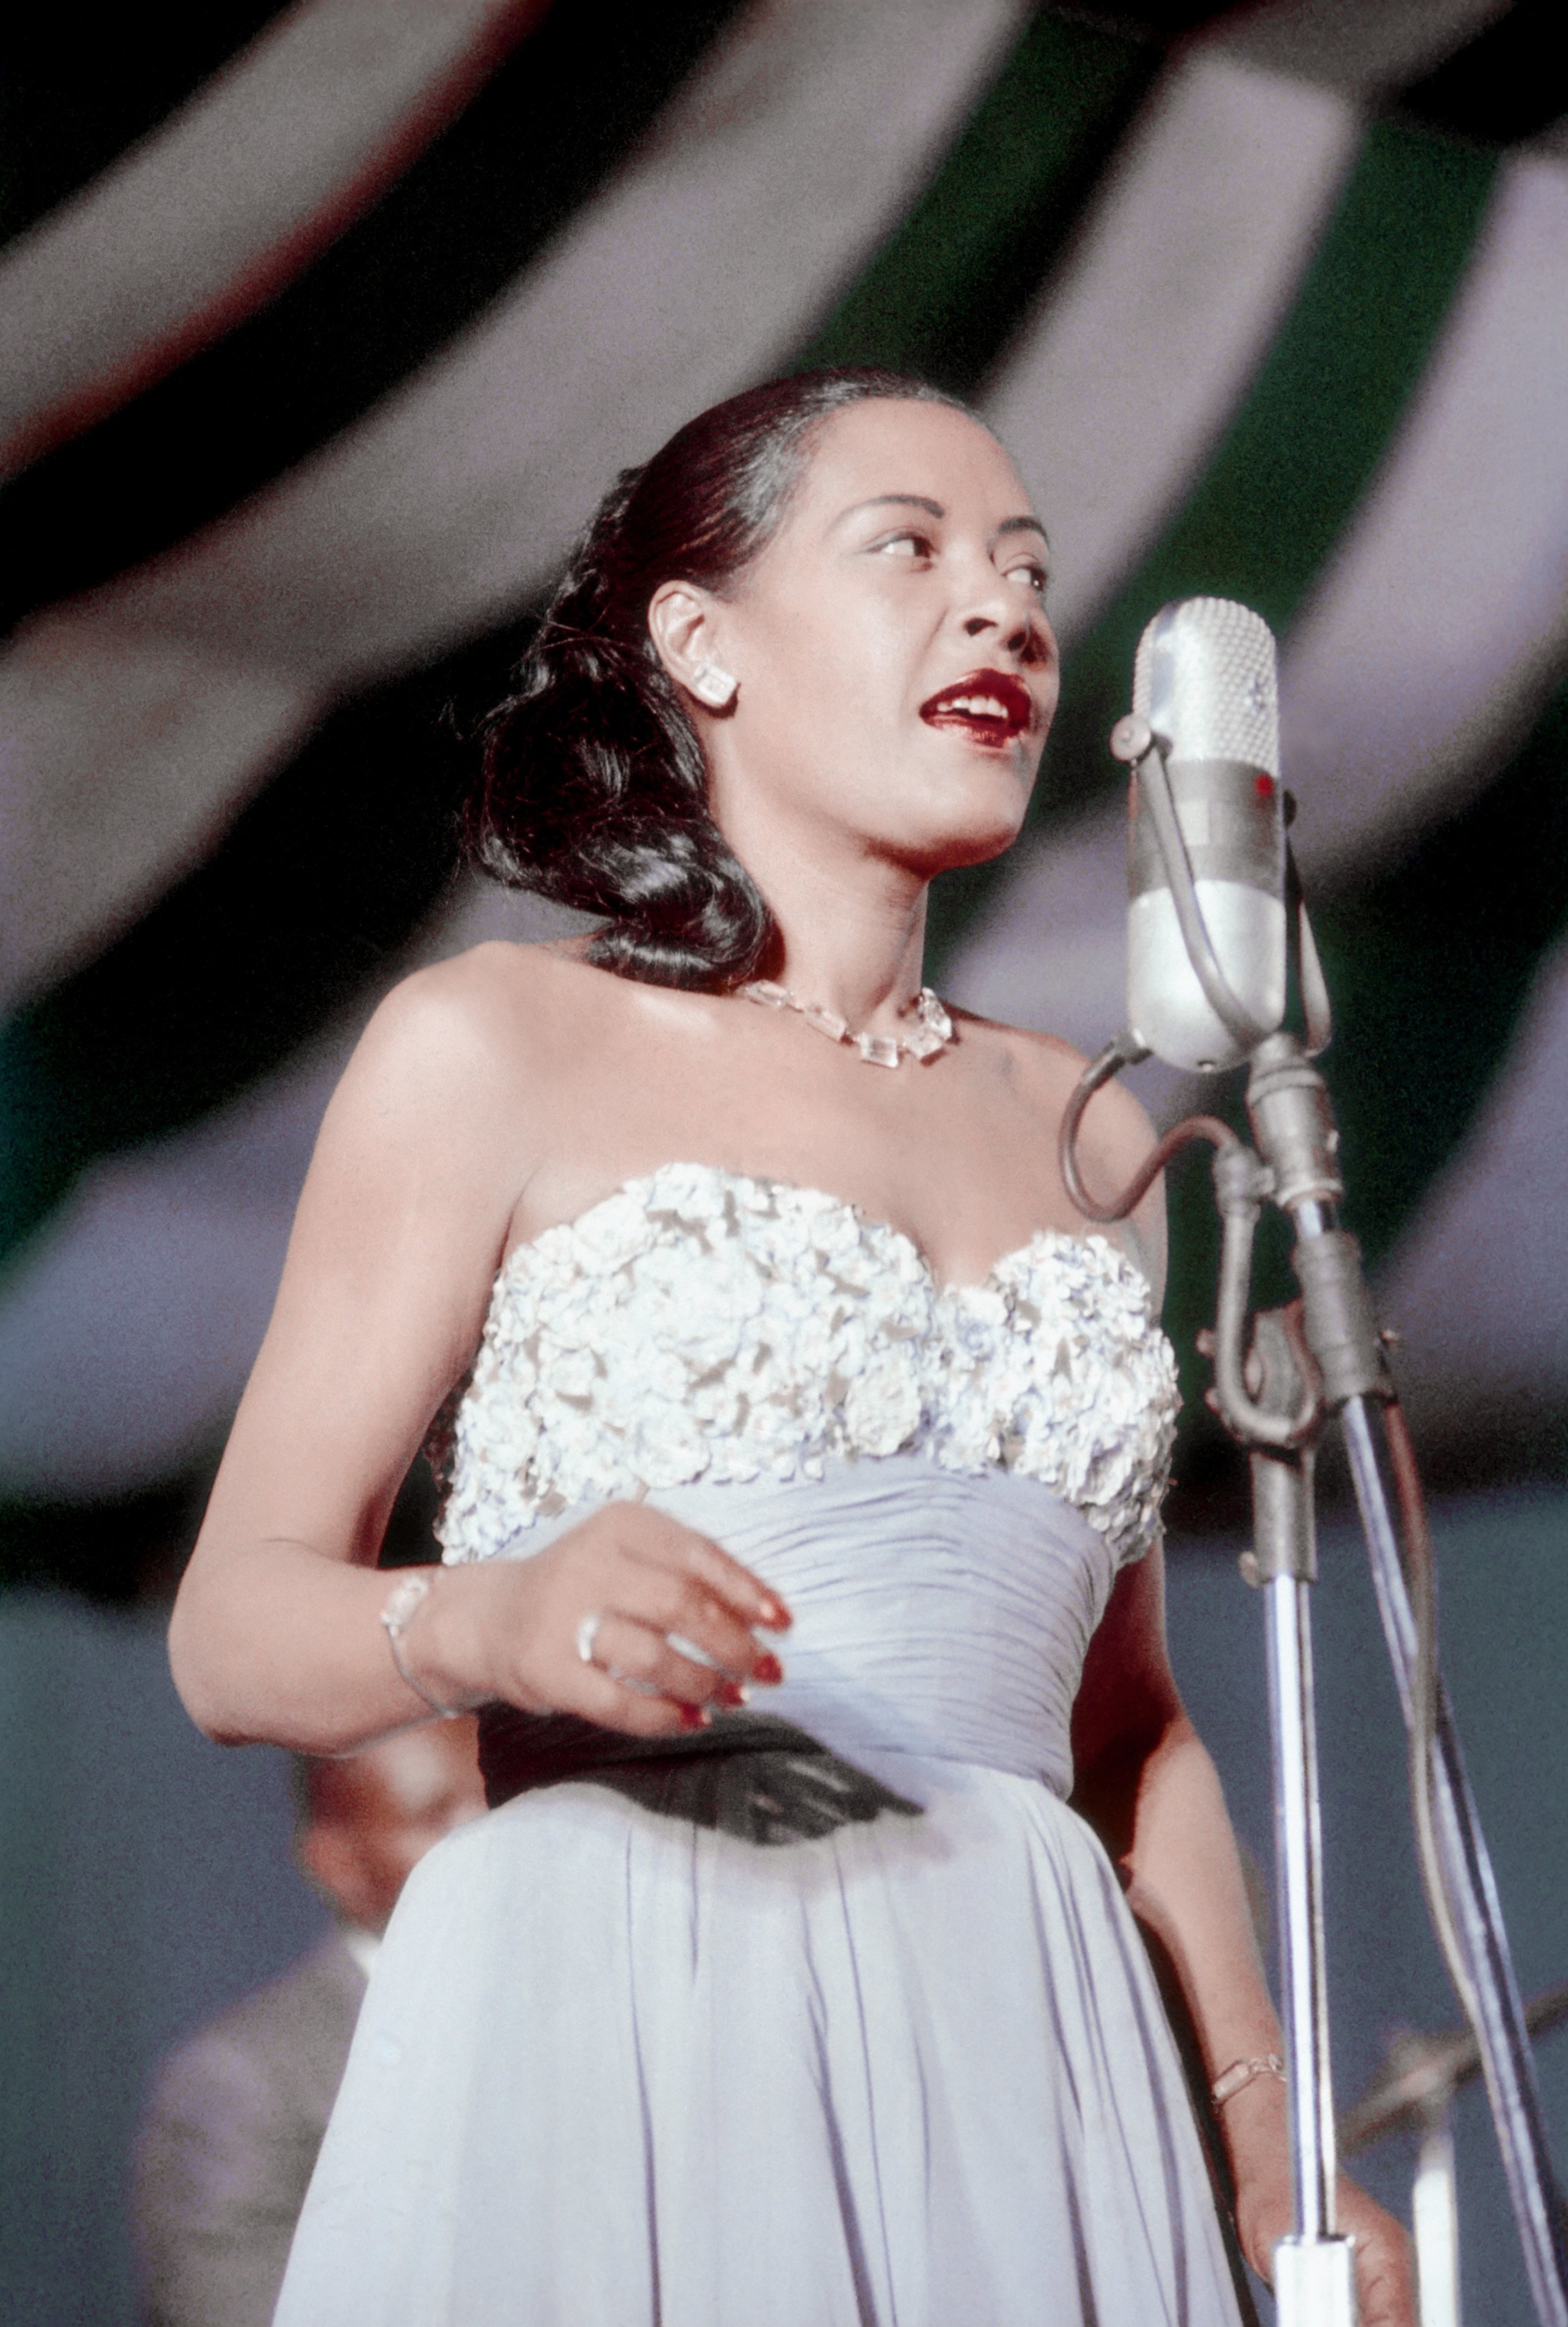 Billie Holiday performing at Newport Jazz Festival